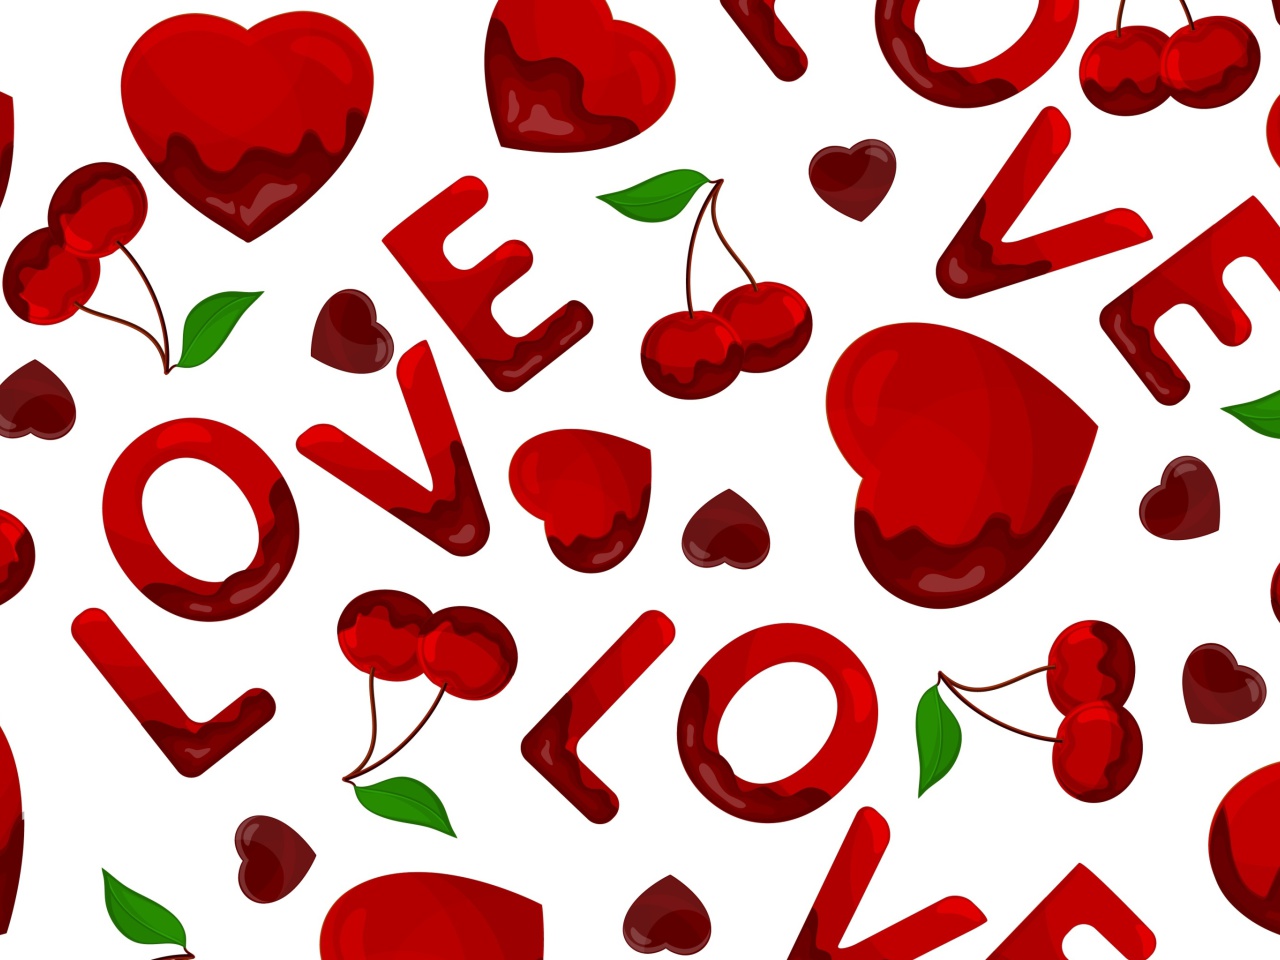 Love Cherries and Hearts wallpaper 1280x960